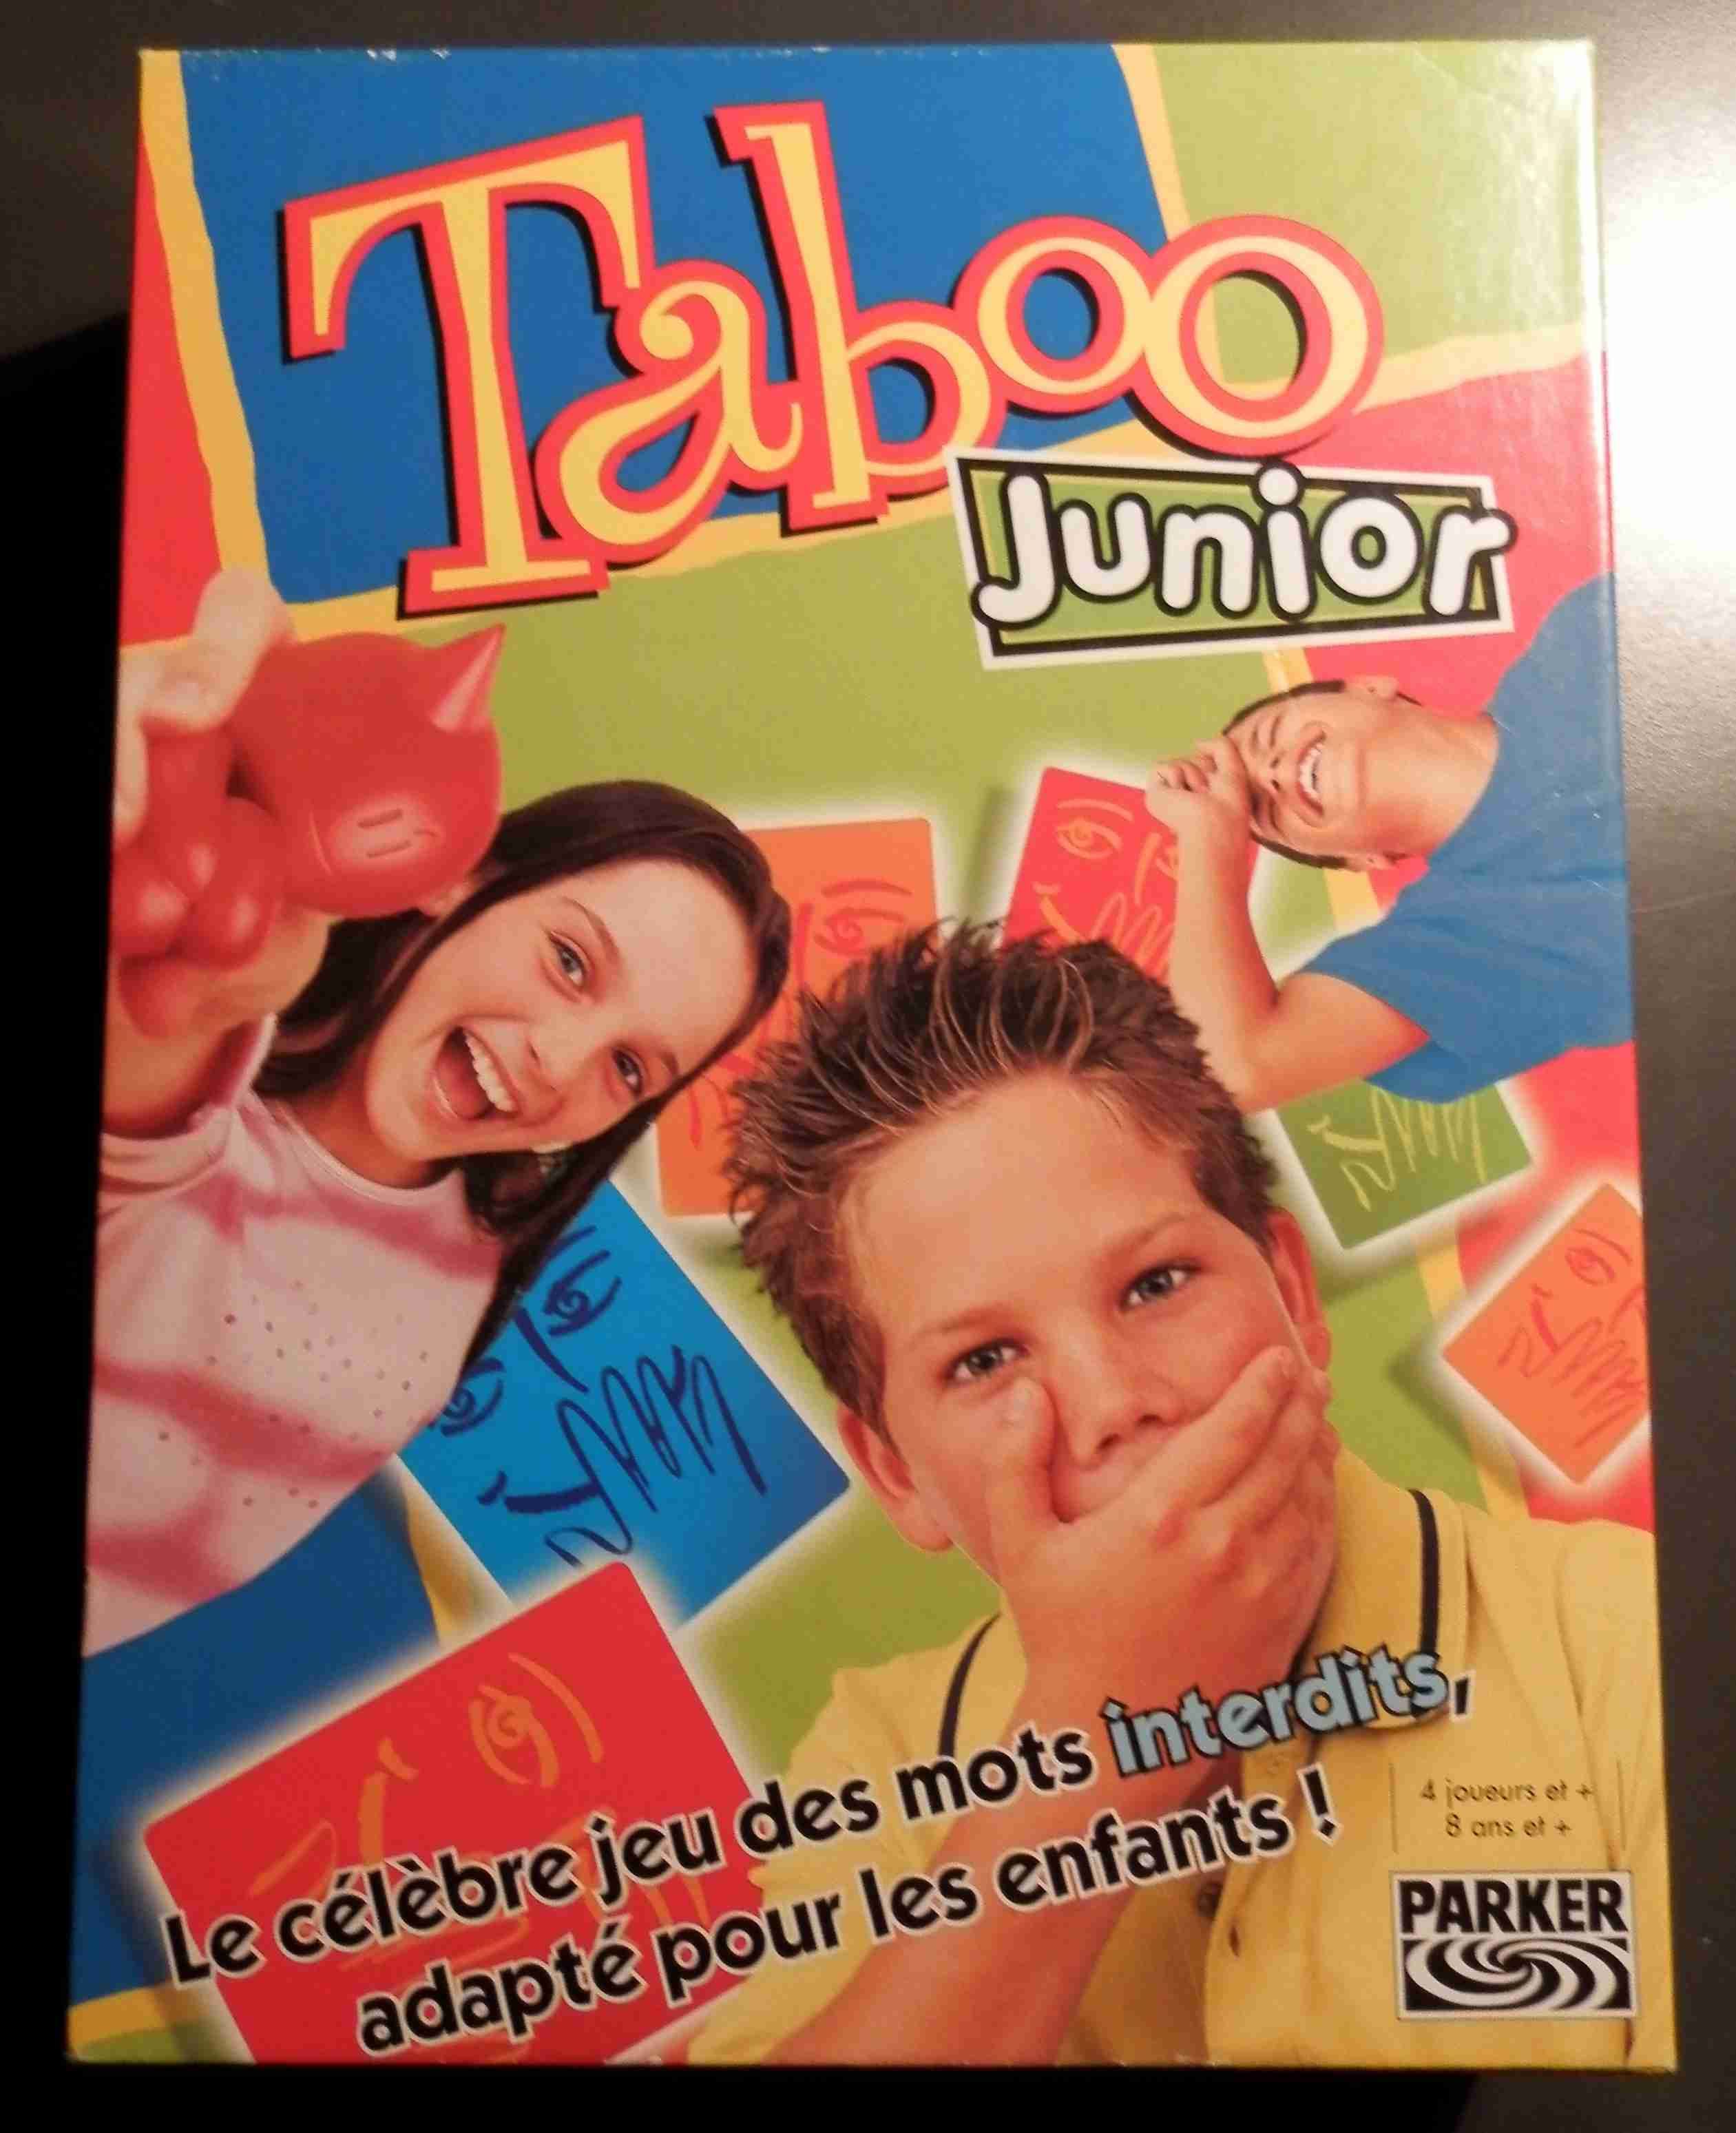 Taboo Junior, Image